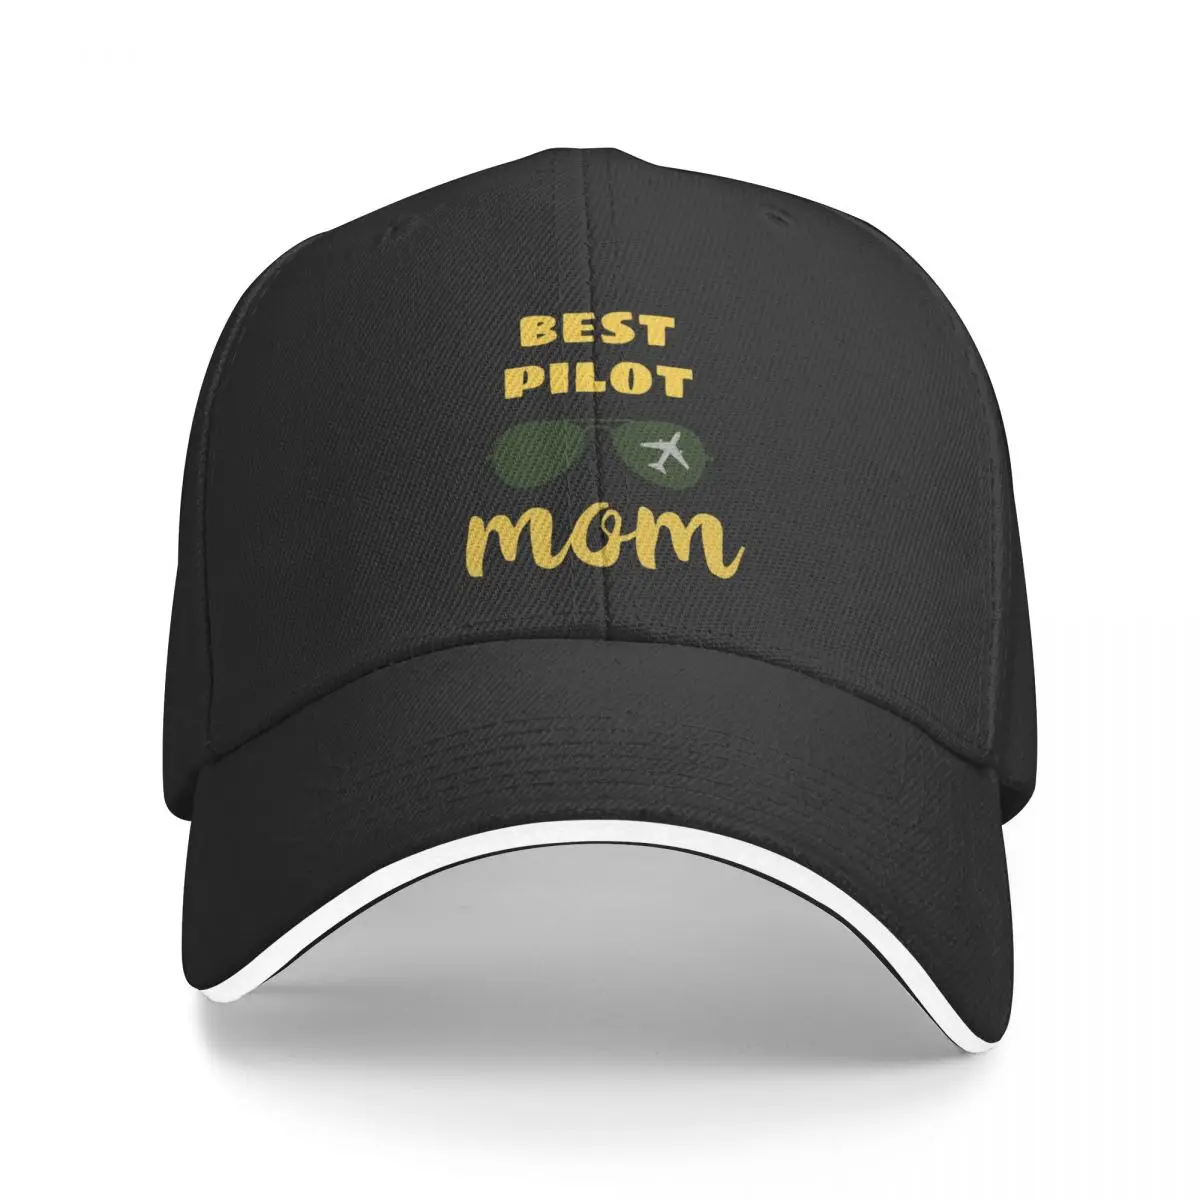 

New Pilot Mom | Pilot Mother | Aviator Sunglasses Design Baseball Cap Caps Big Size Hat hard hat Hats Man Women's